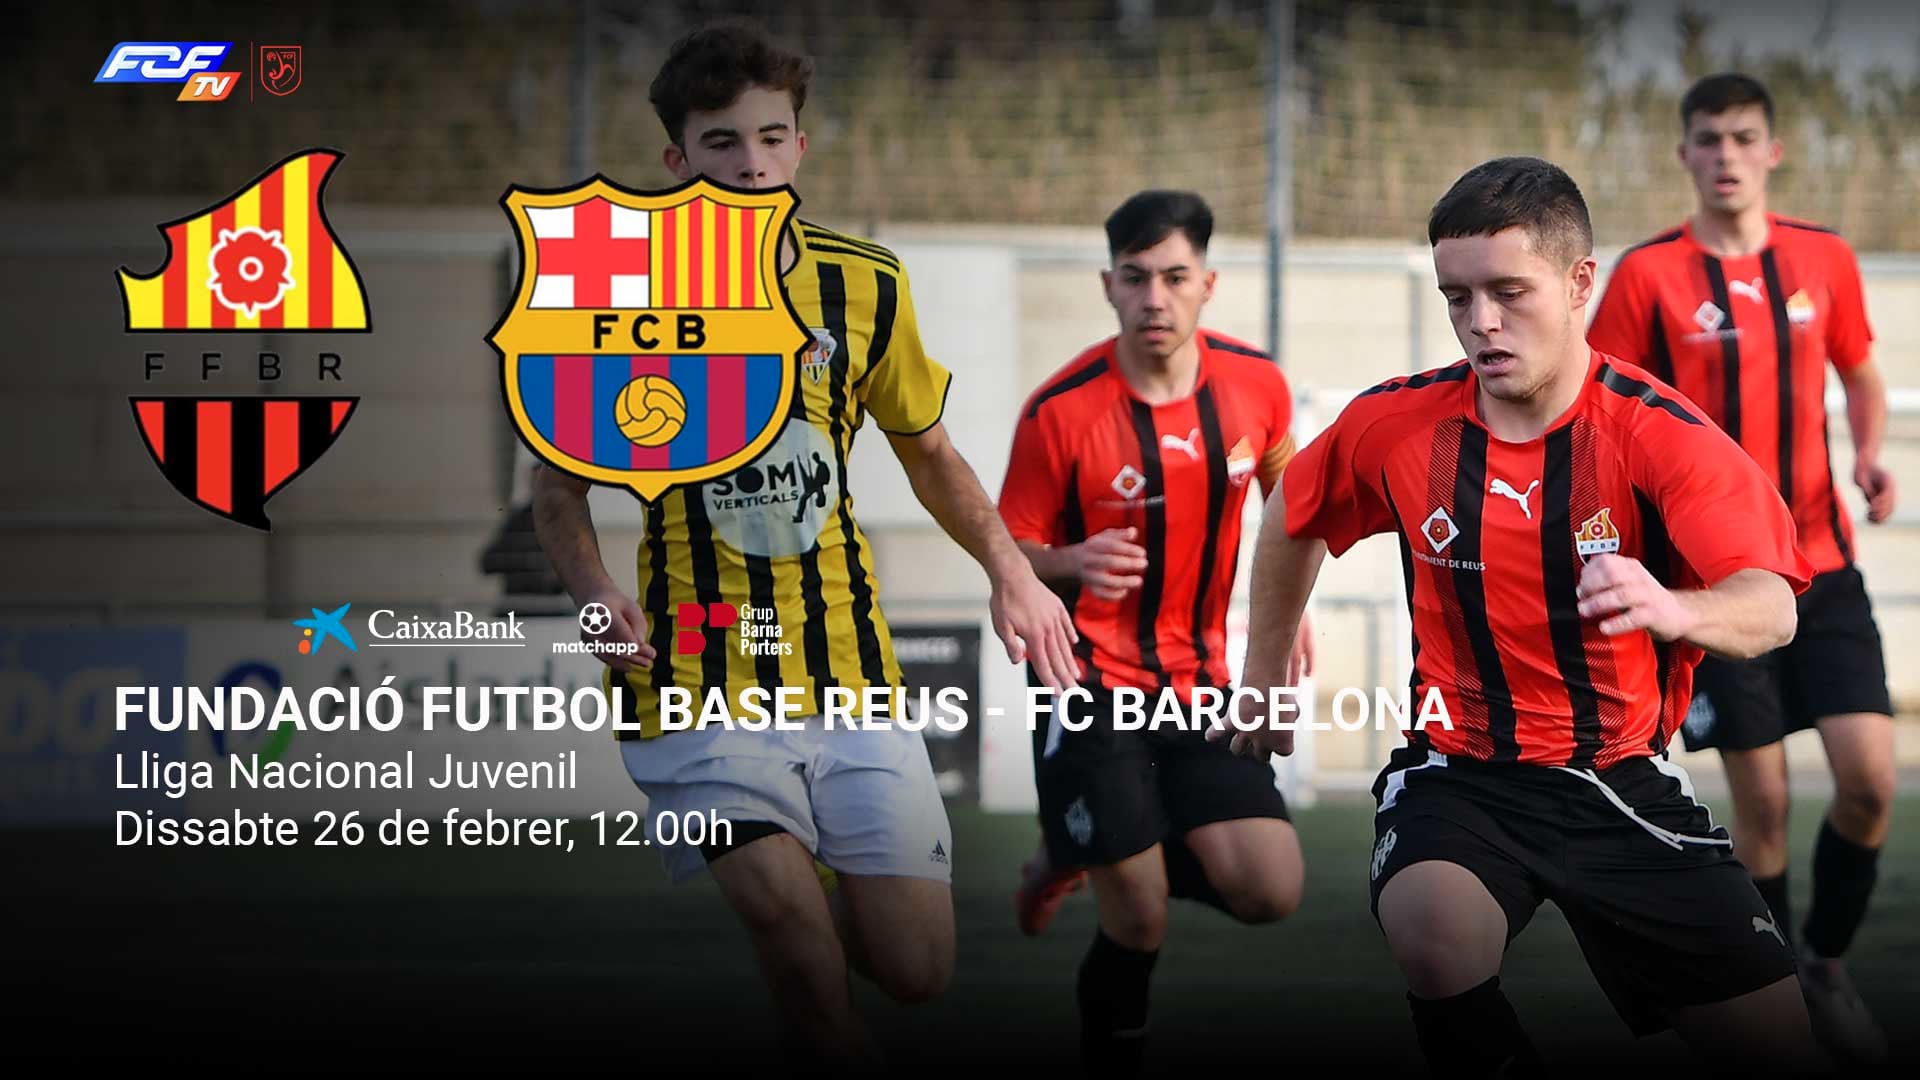 FUNDACIÓ FUTBOL BASE REUS - FC BARCELONA on Vimeo